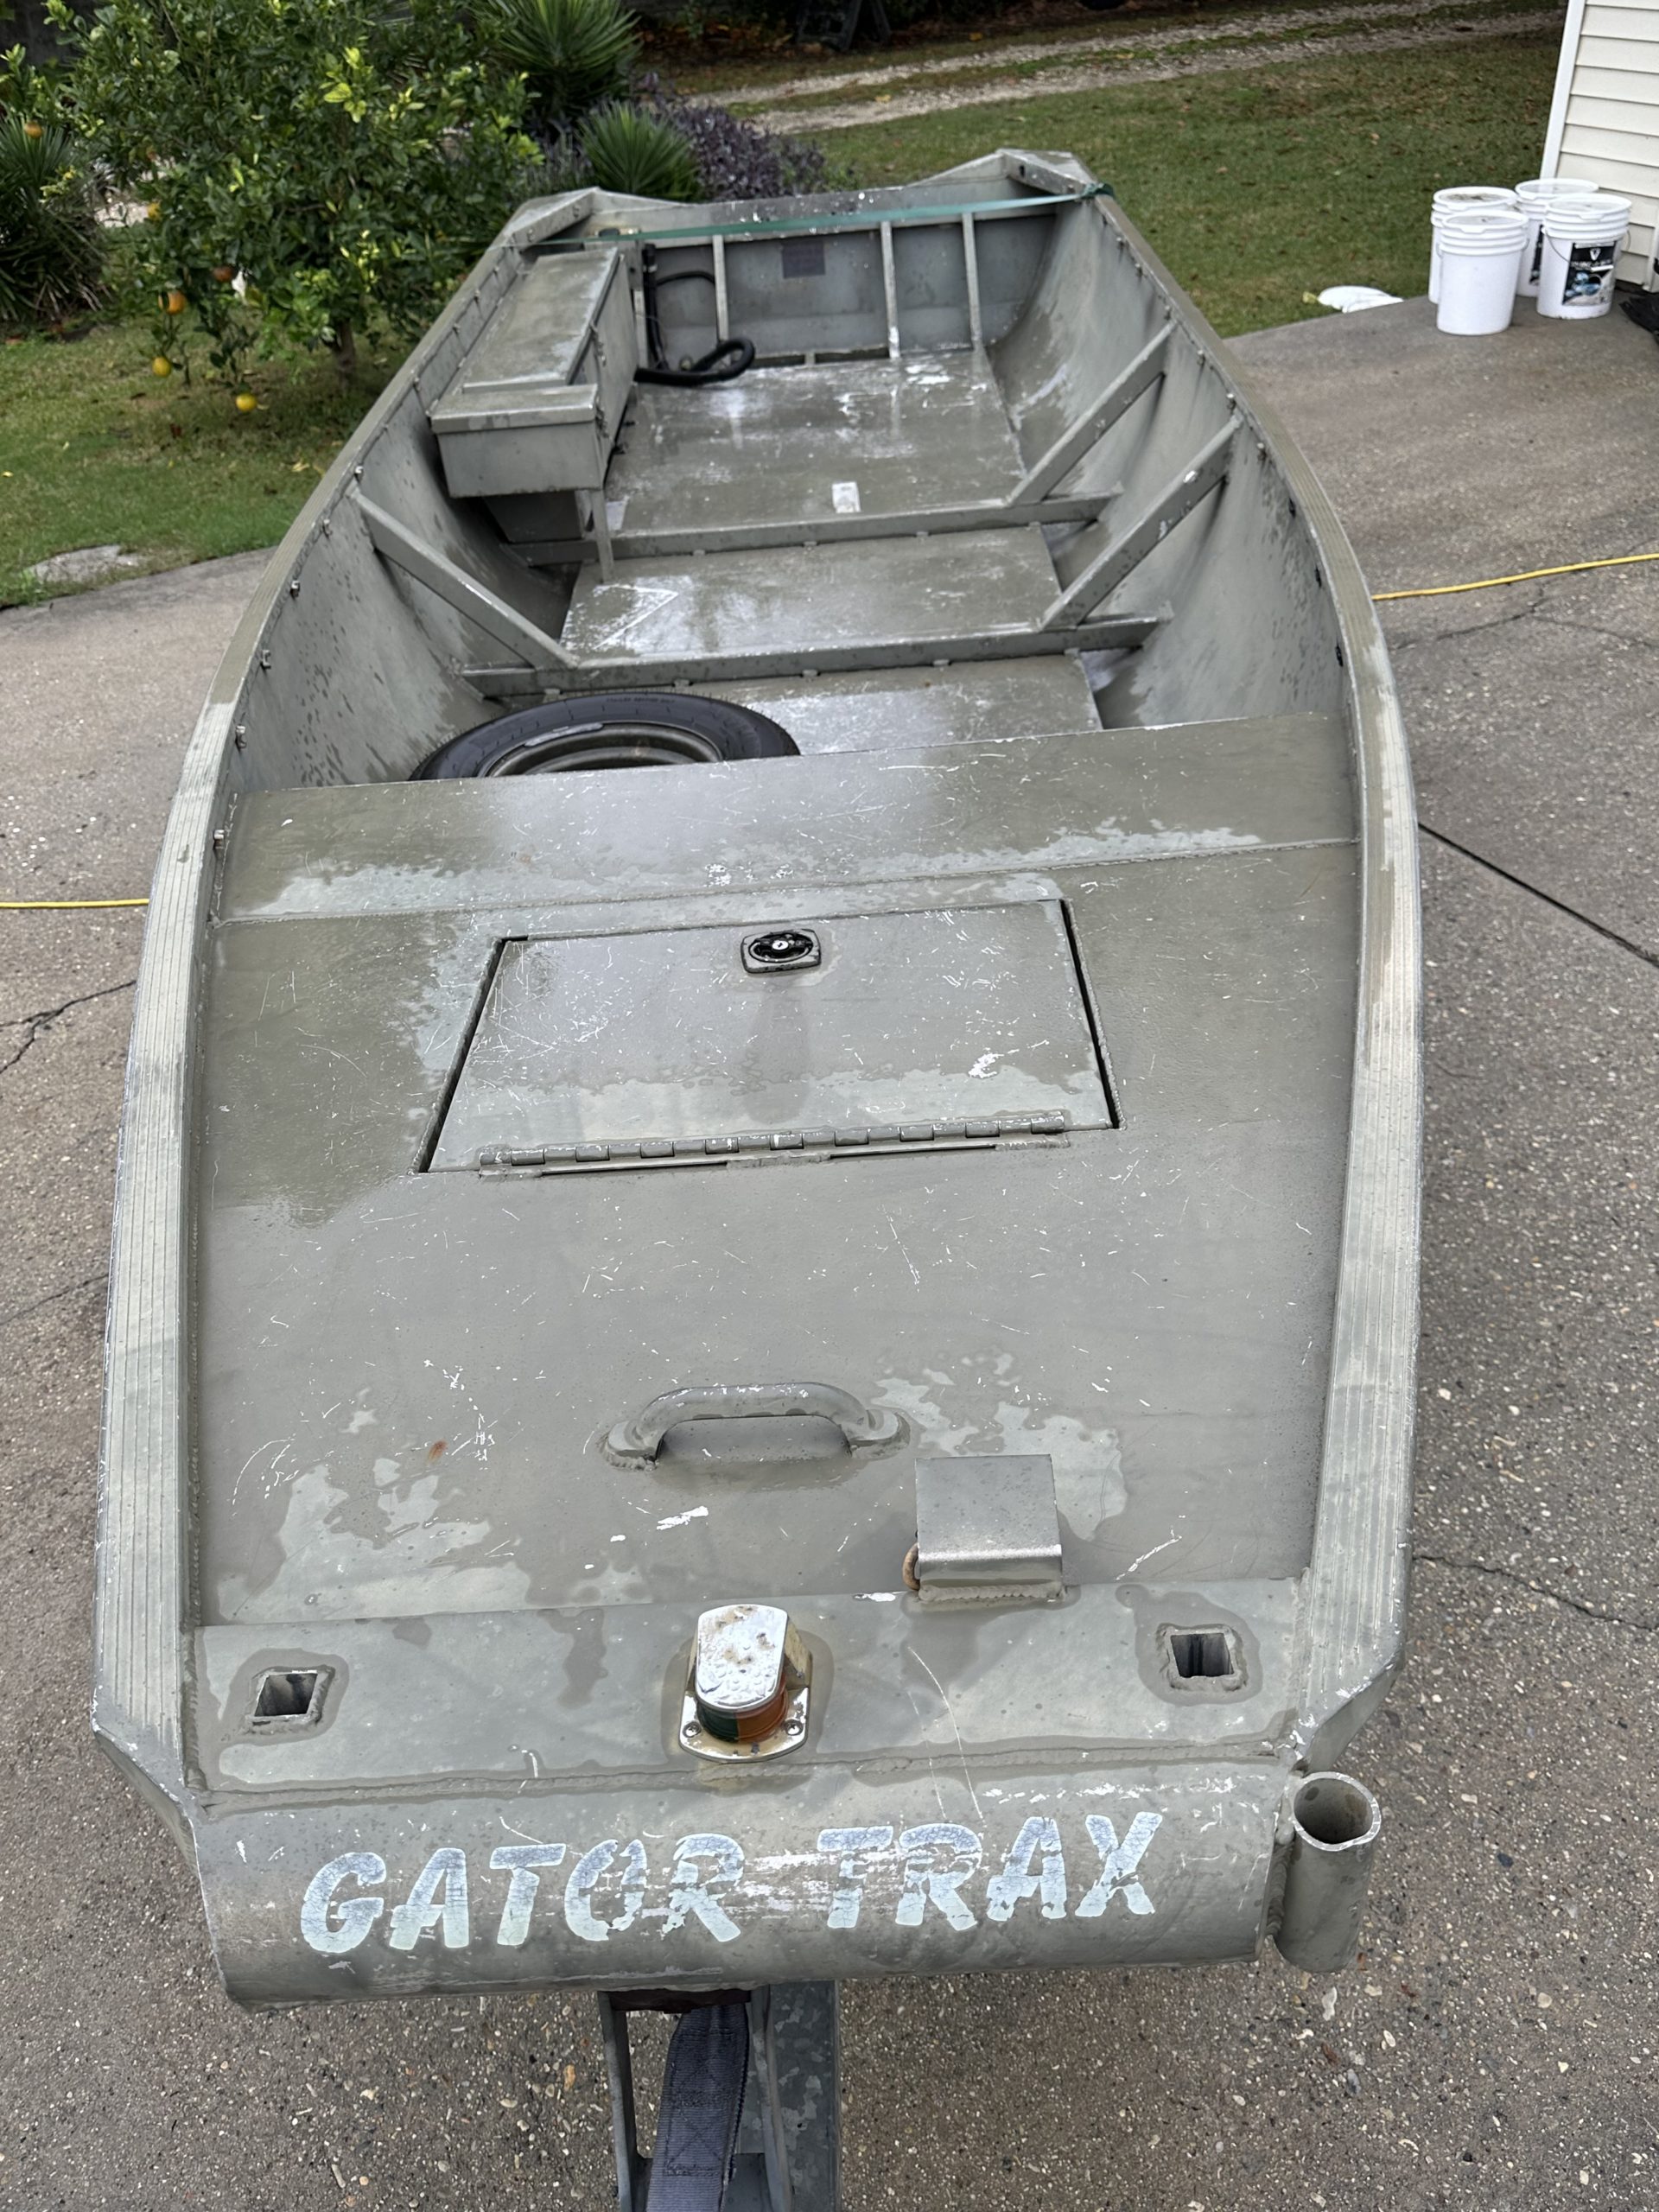 18’ GatorTrax boat